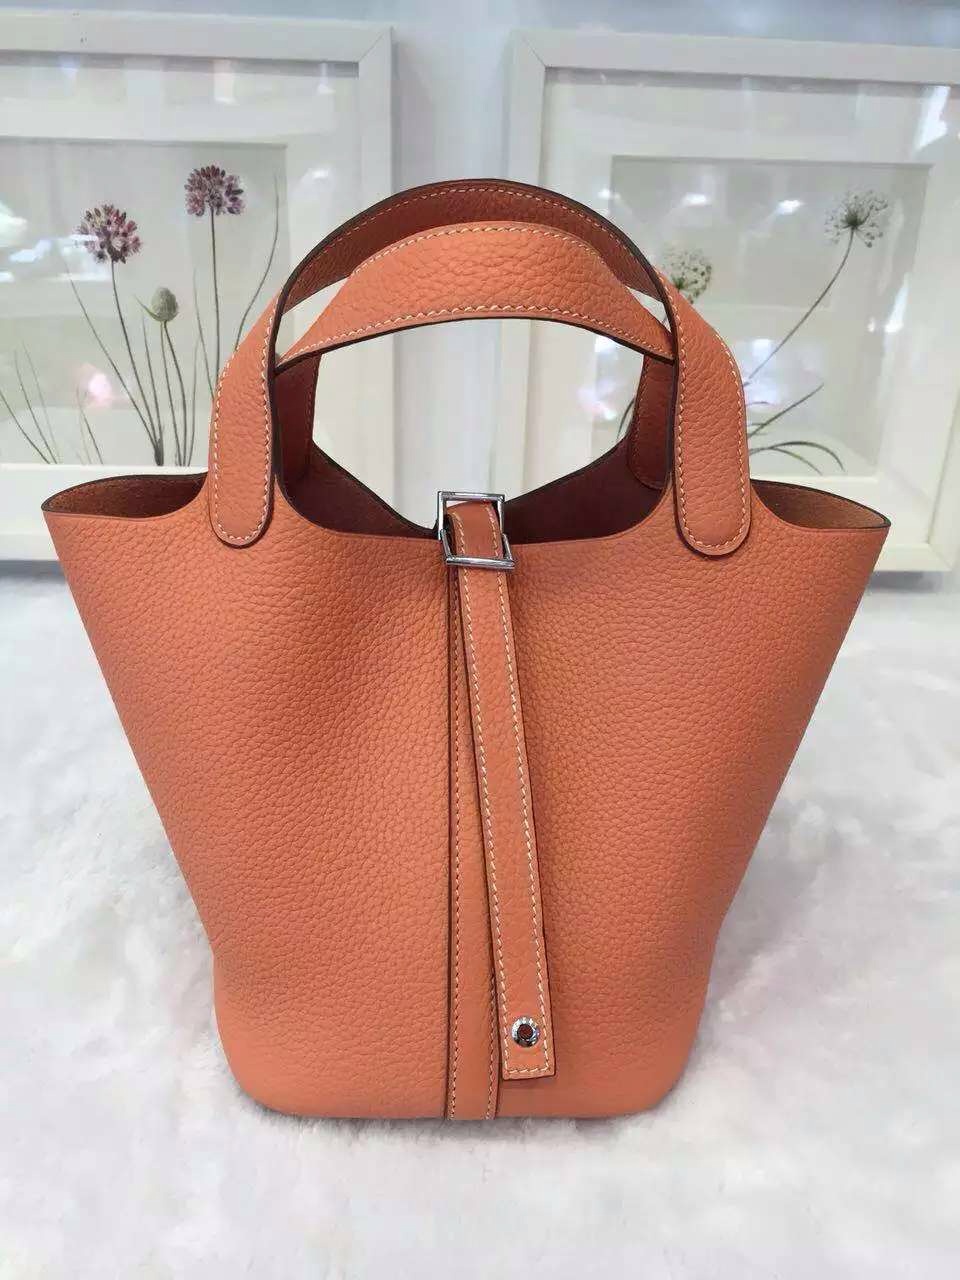 Discount Hermes Picotin Lock Bag France Togo Calfskin Leather in L5 Crevette Pink